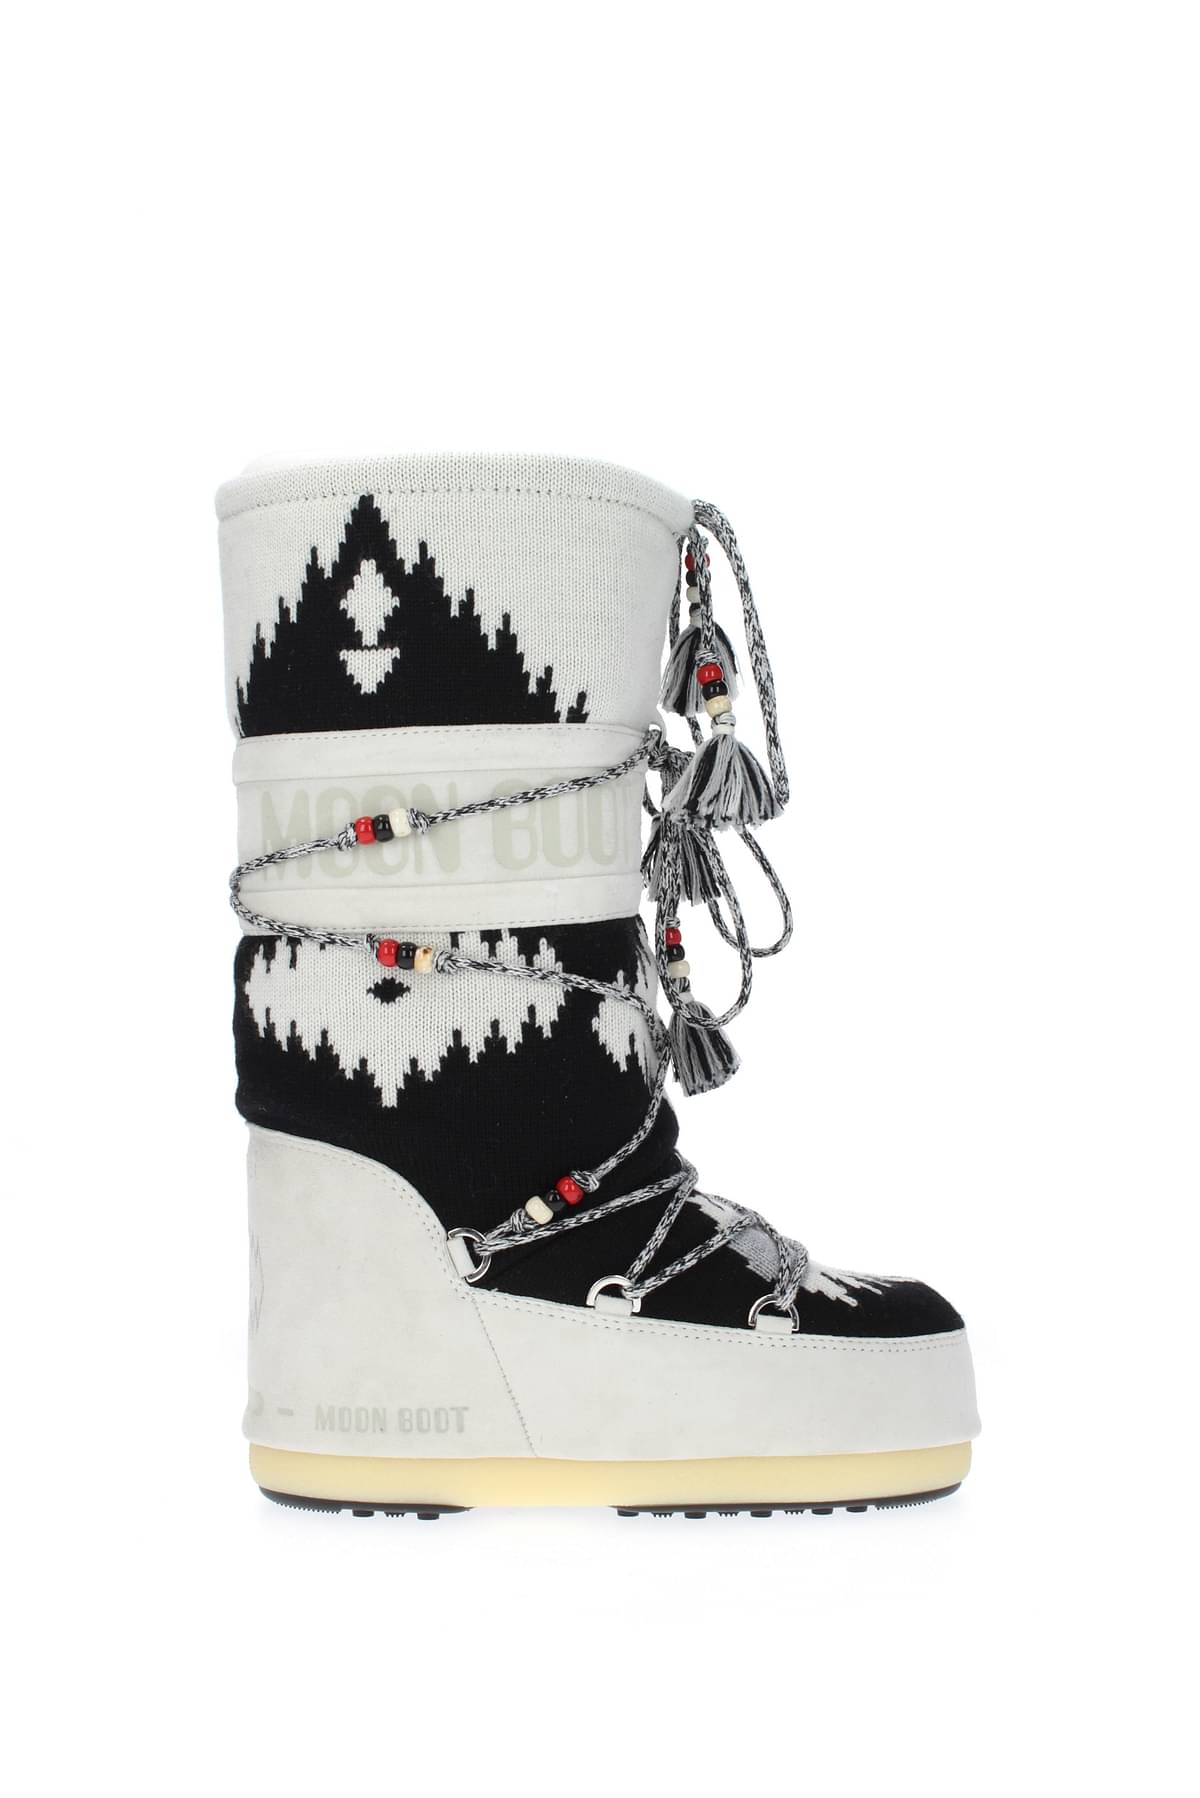 Moon Boot Black & White Logo Snow Boots